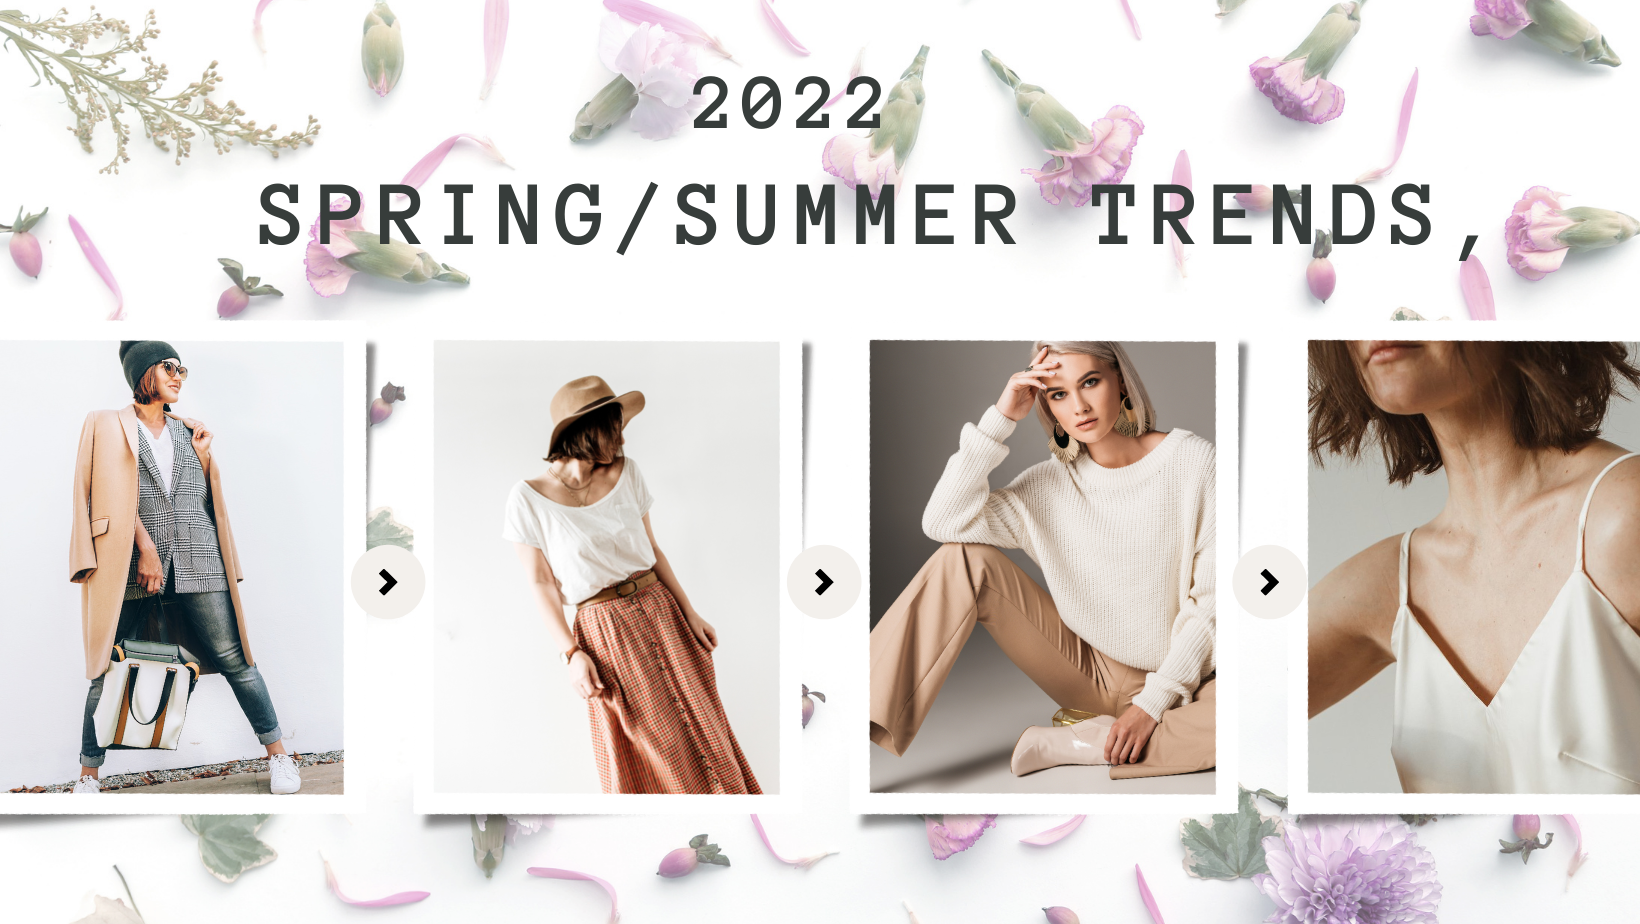 Upcoming Spring/Summer 2022 Trends Forecast